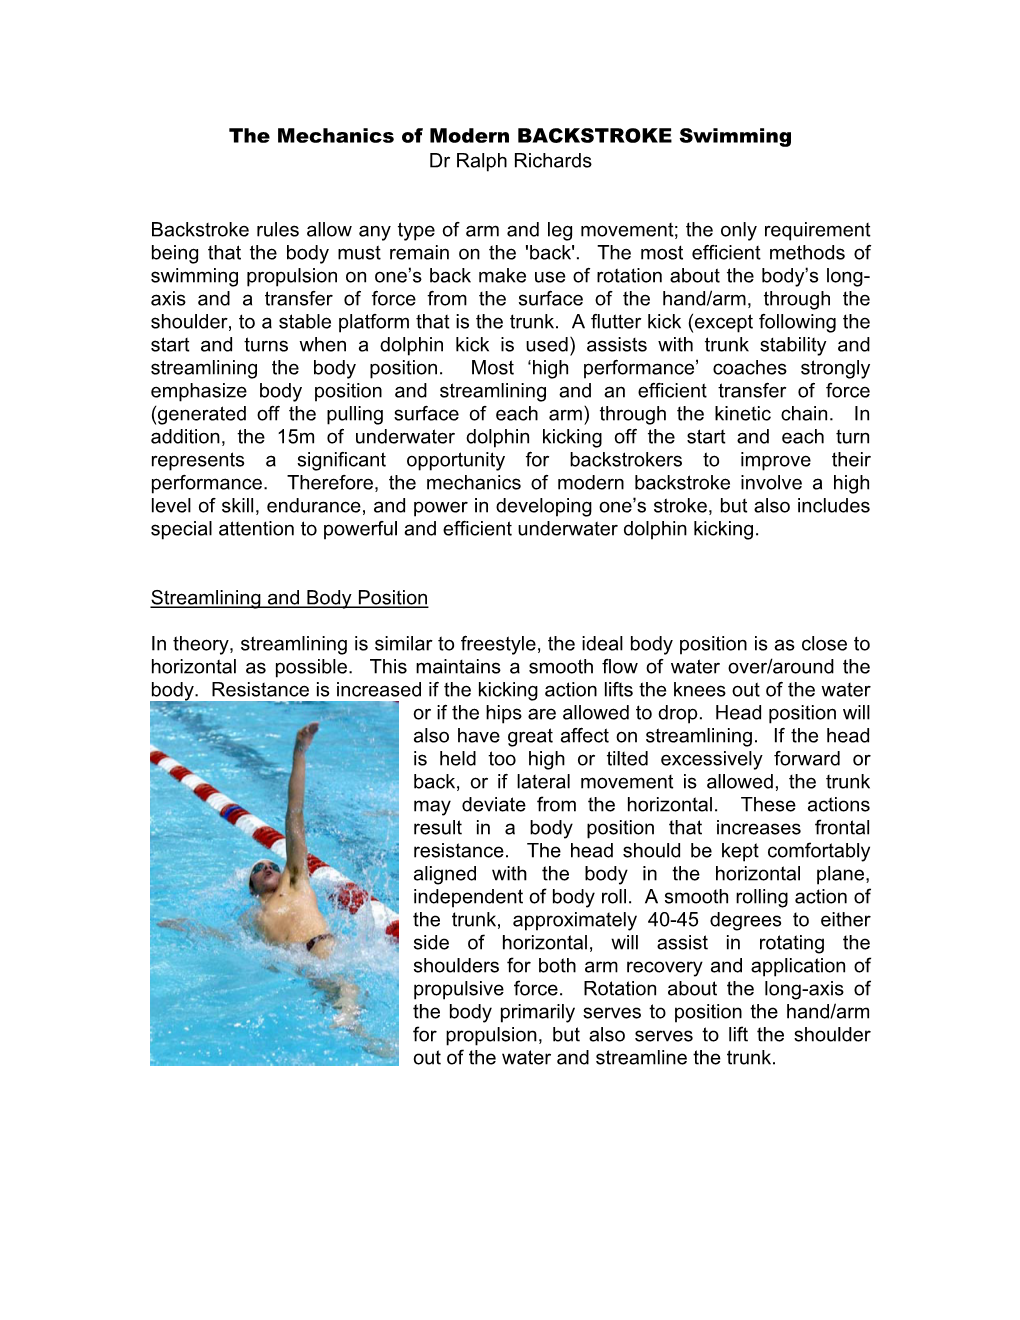 Mechanics of Modern BACKSTROKE Swimming Dr Ralph Richards